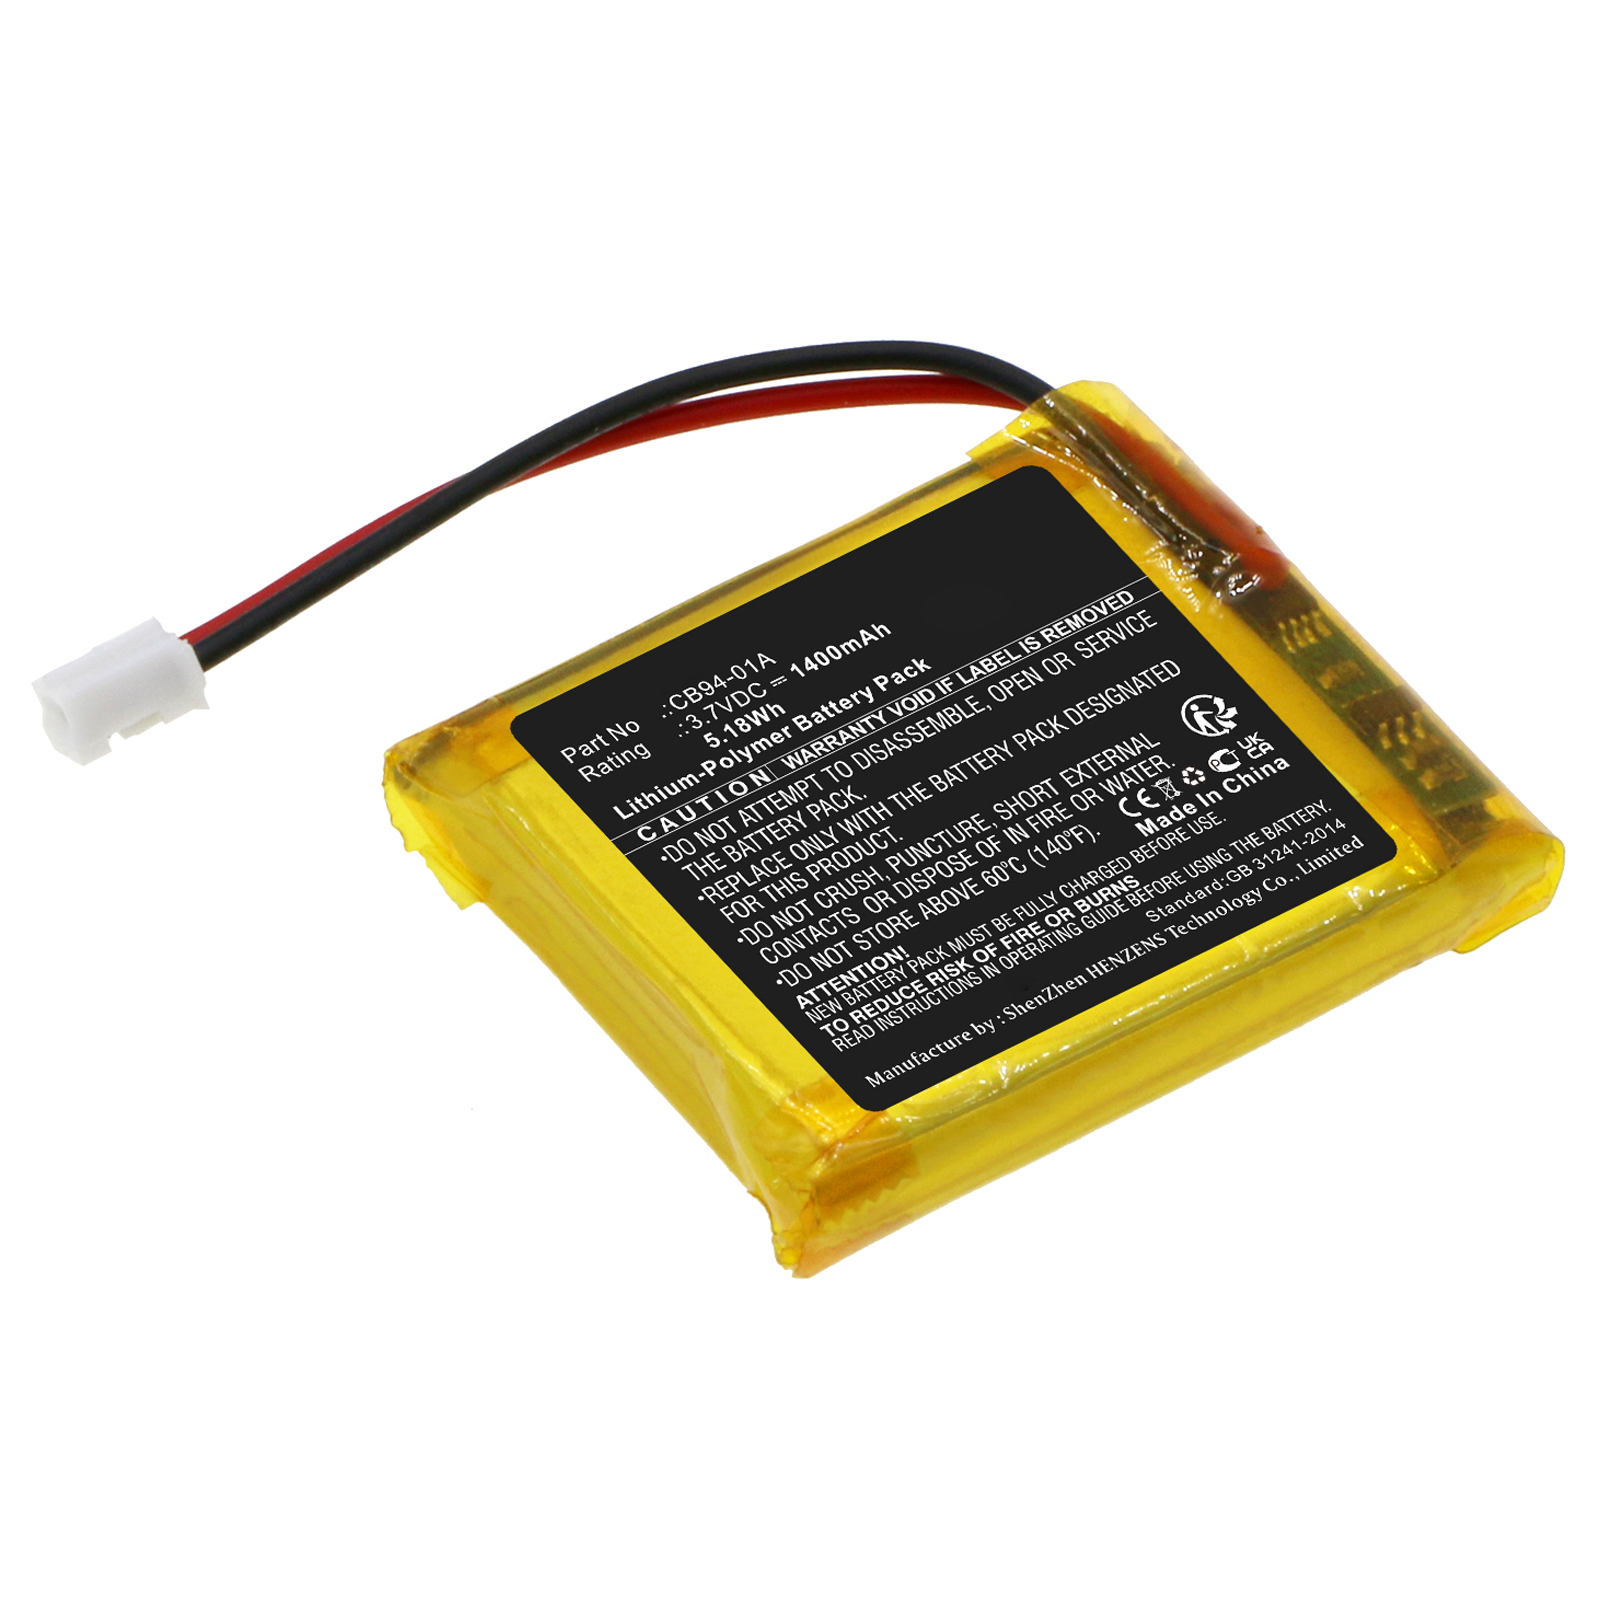 Synergy Digital Baby Monitor Battery, Compatible with Motorola CB94-01A Baby Monitor Battery (Li-Pol, 3.7V, 1400mAh)